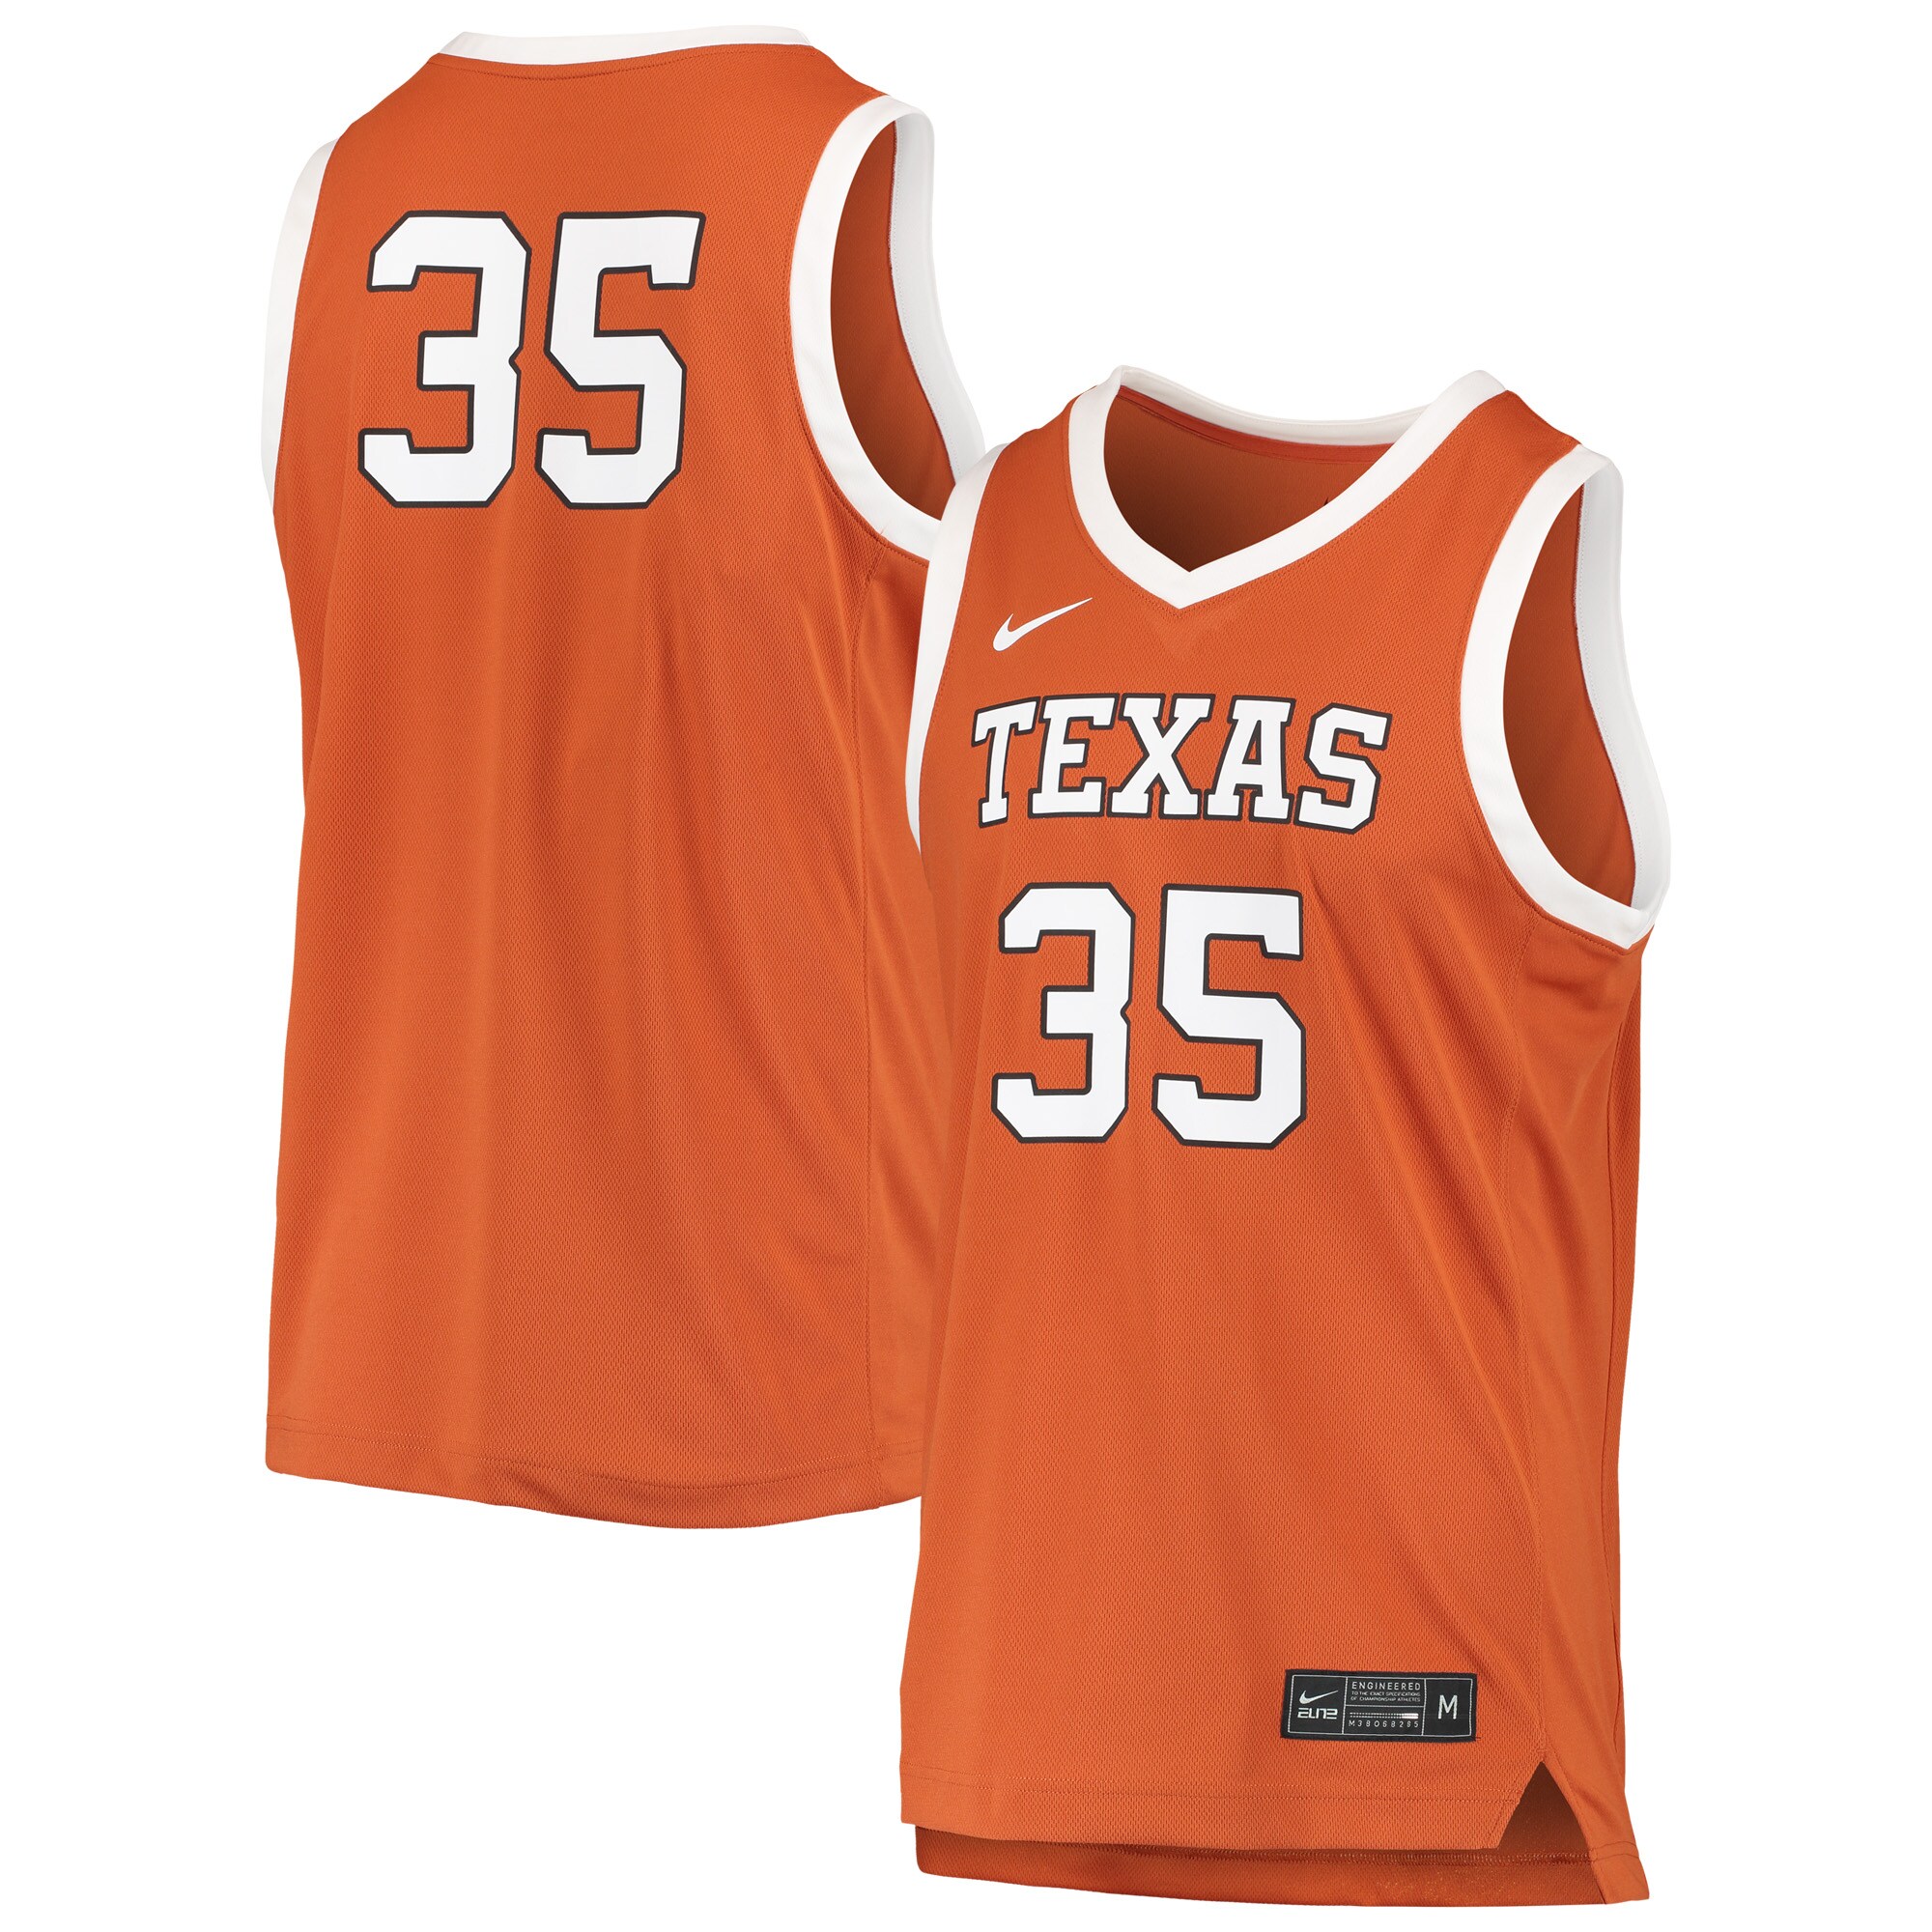 #35 Texas Longhorns Replica Women'S Basketball Jersey - Texas Orange For Youth Women Men